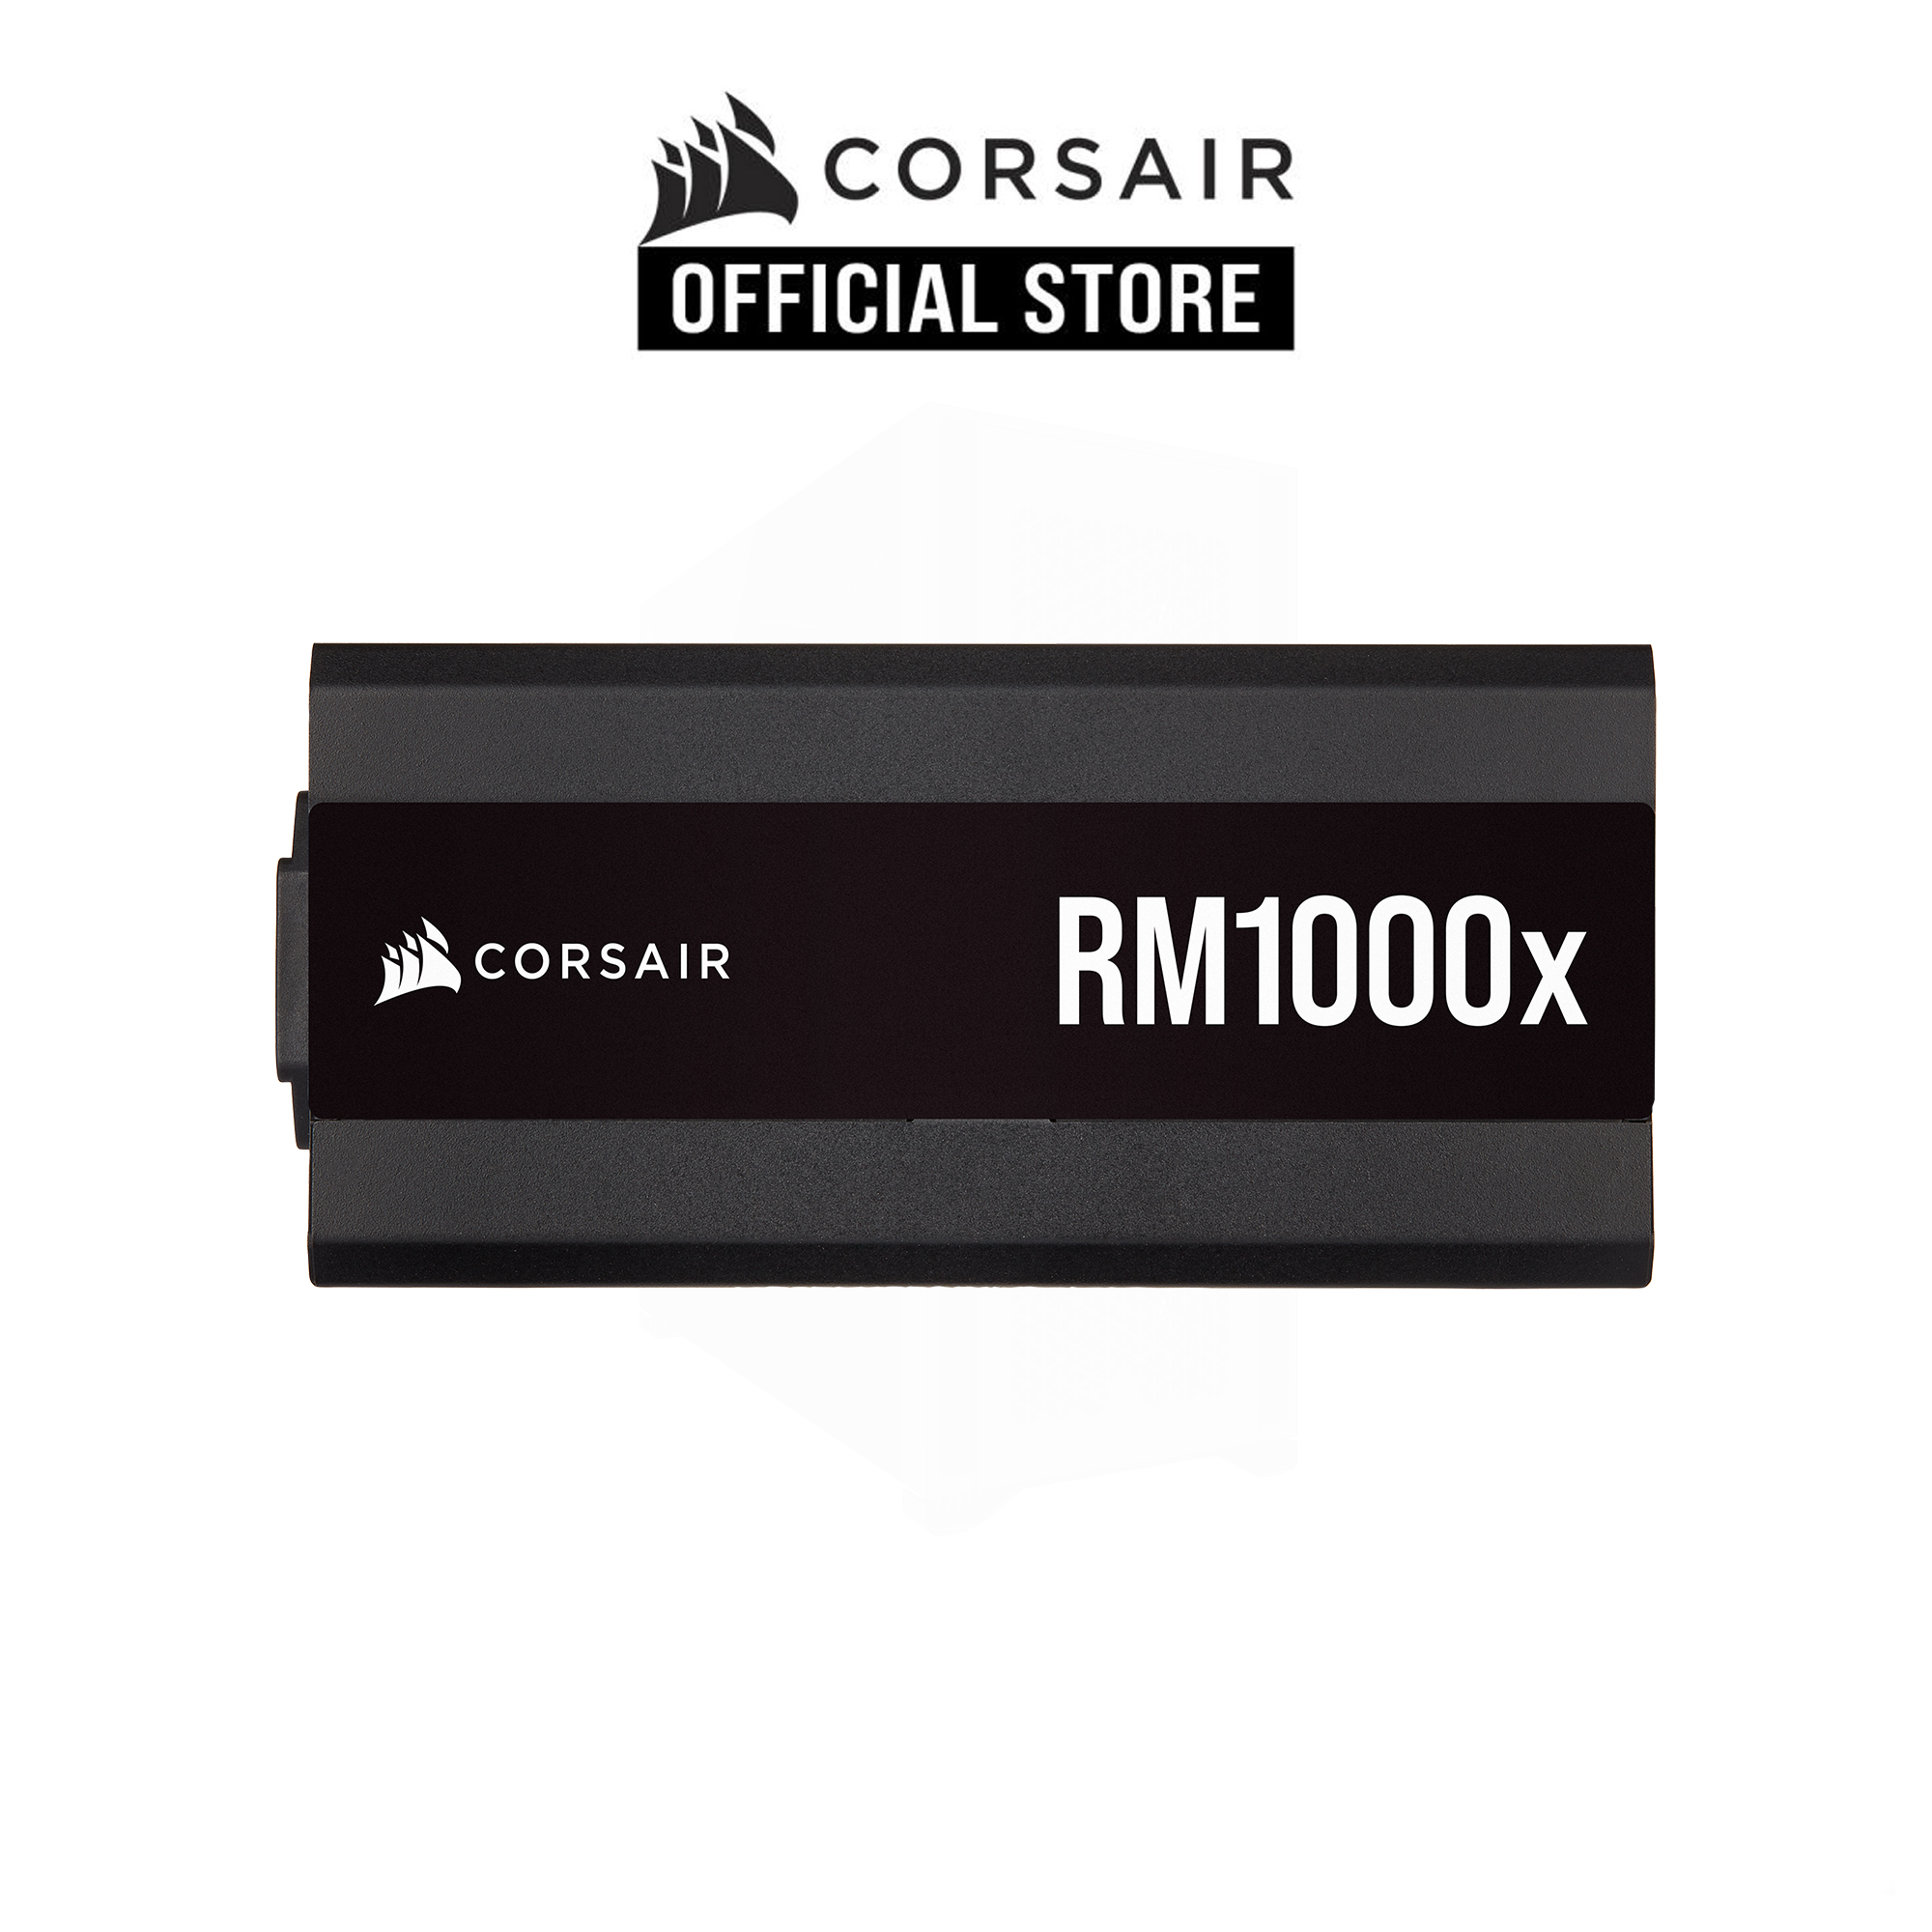 CORSAIR RMx Shift Series RM1000x 80 Plus Gold Fully Modular ATX